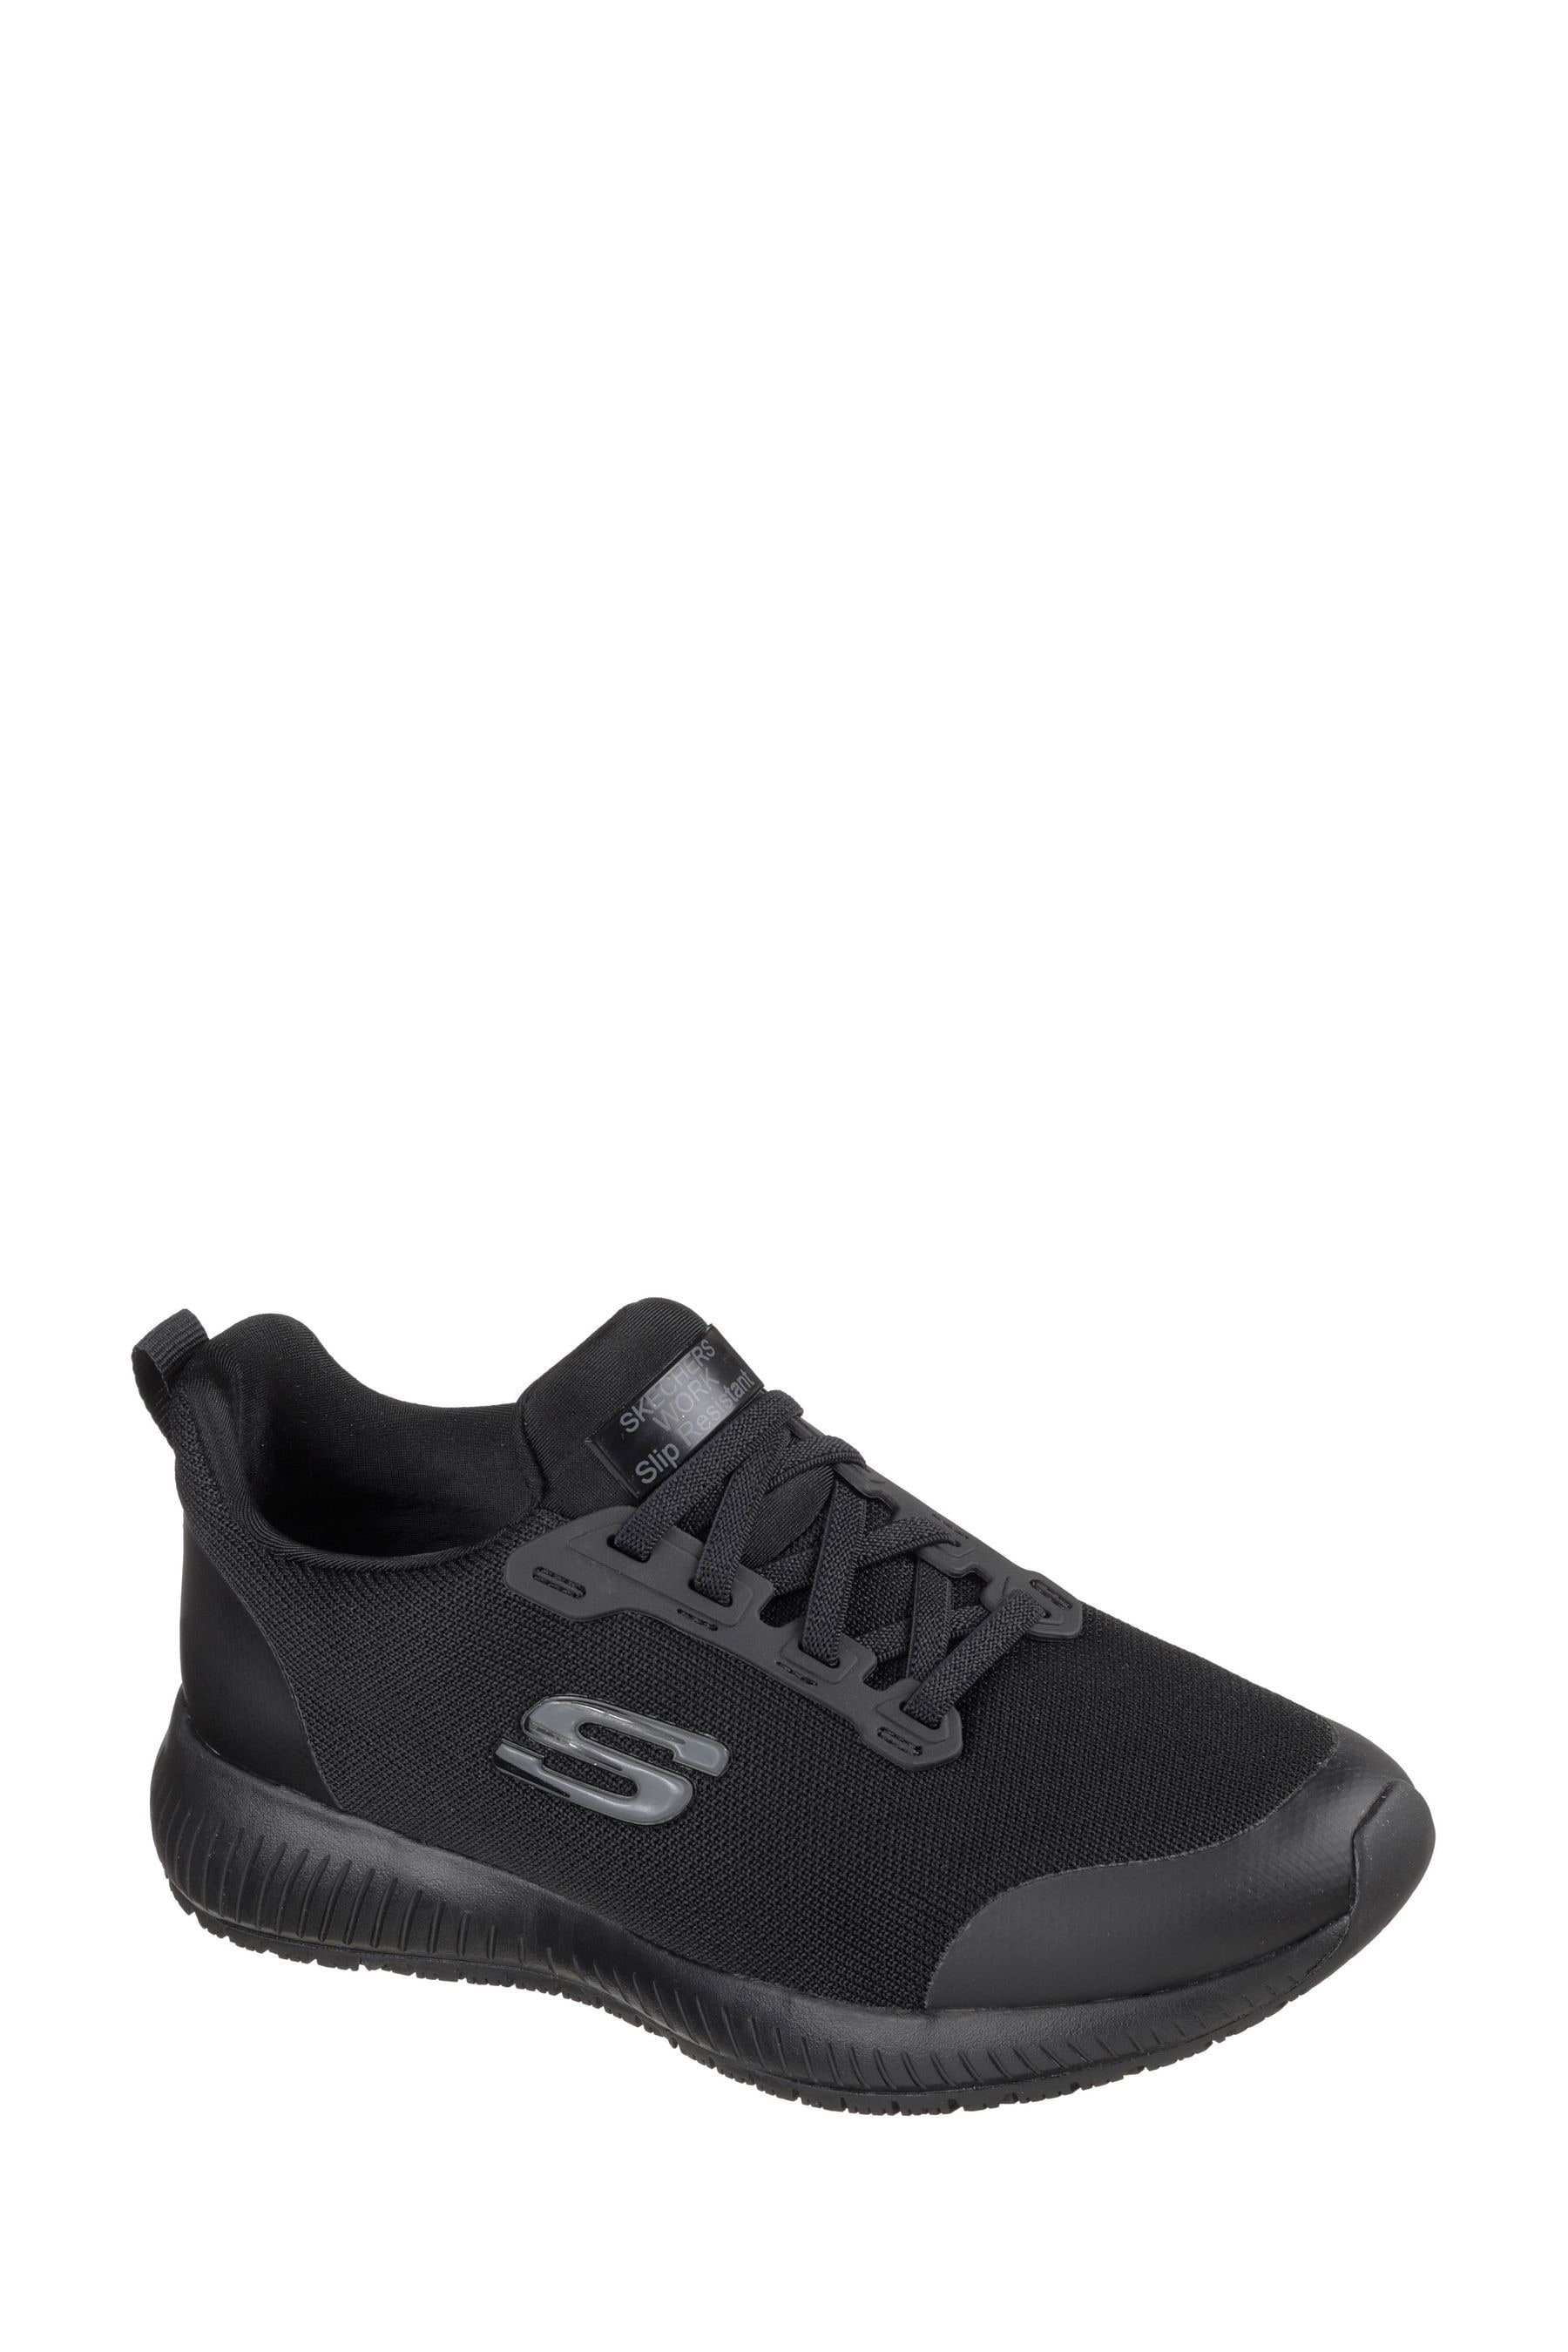 Skechers Shoes Wide Fit Top Sellers | bellvalefarms.com